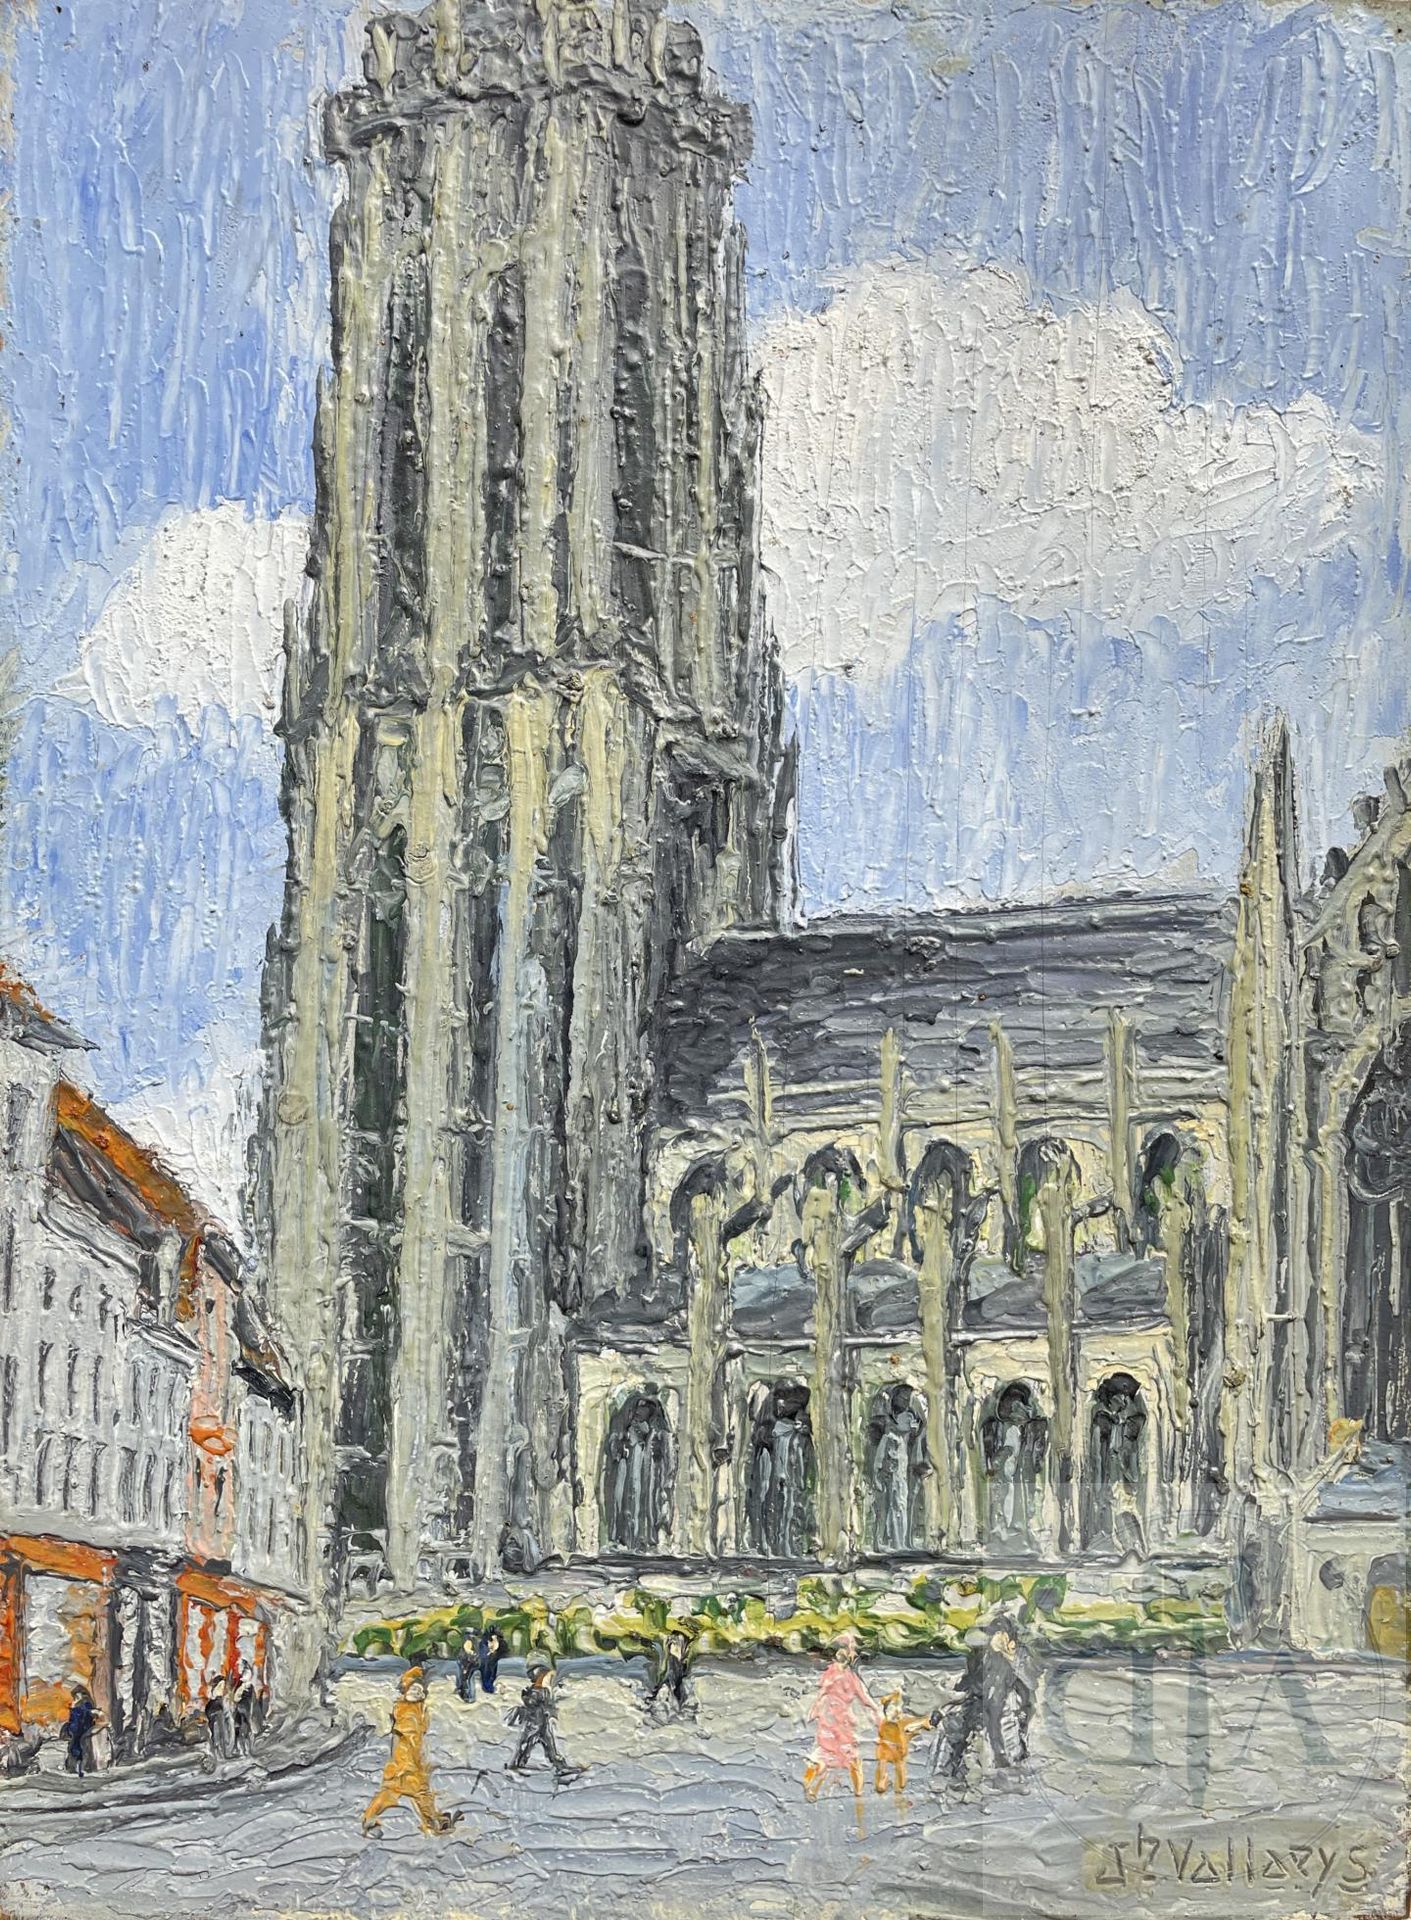 Null J. Valarys/Originalwerk mit einer Illustration des Turms der St. Rombout-Ka&hellip;